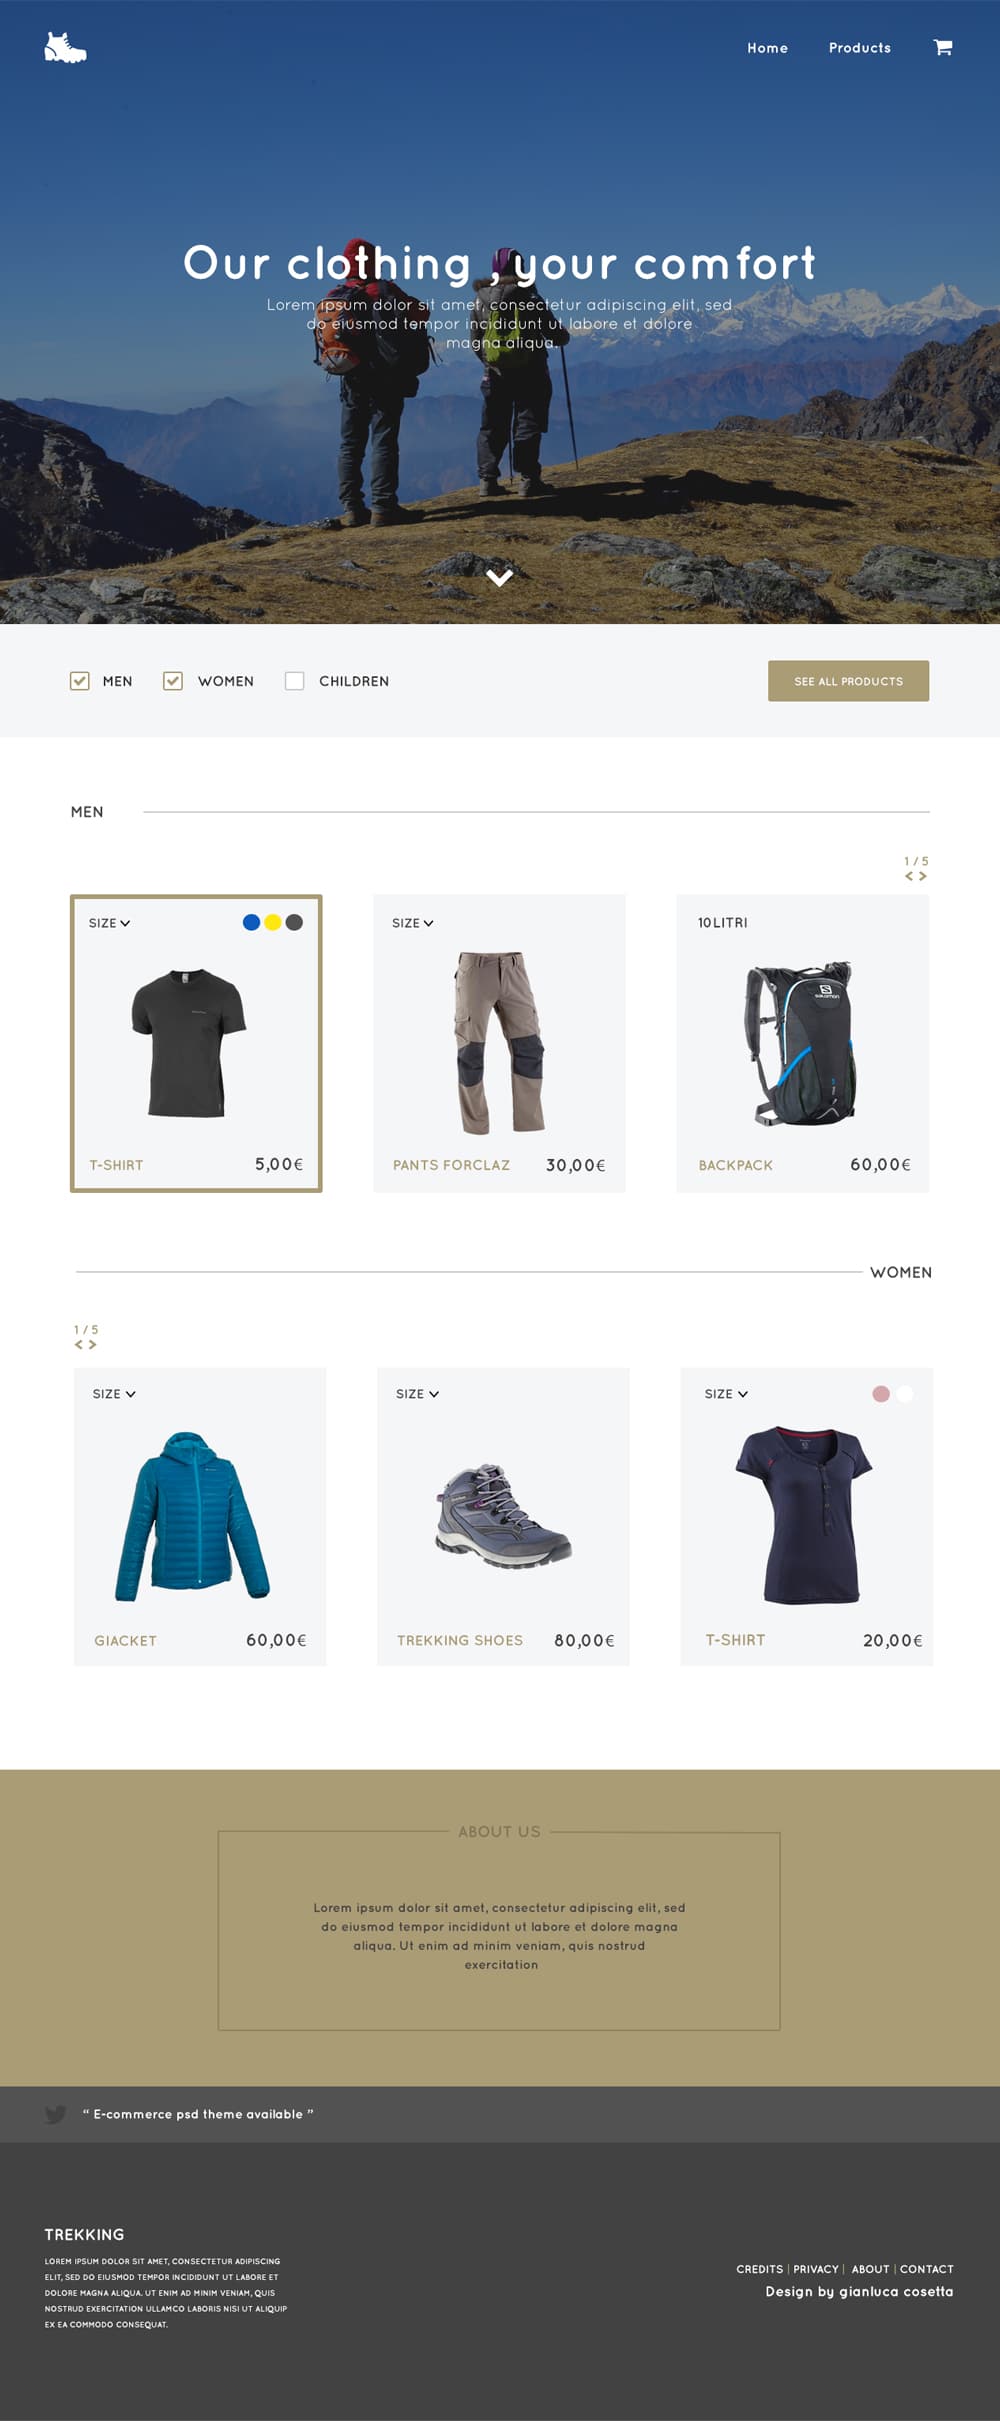 Trekking Store - Free E Commerce Web Template PSD